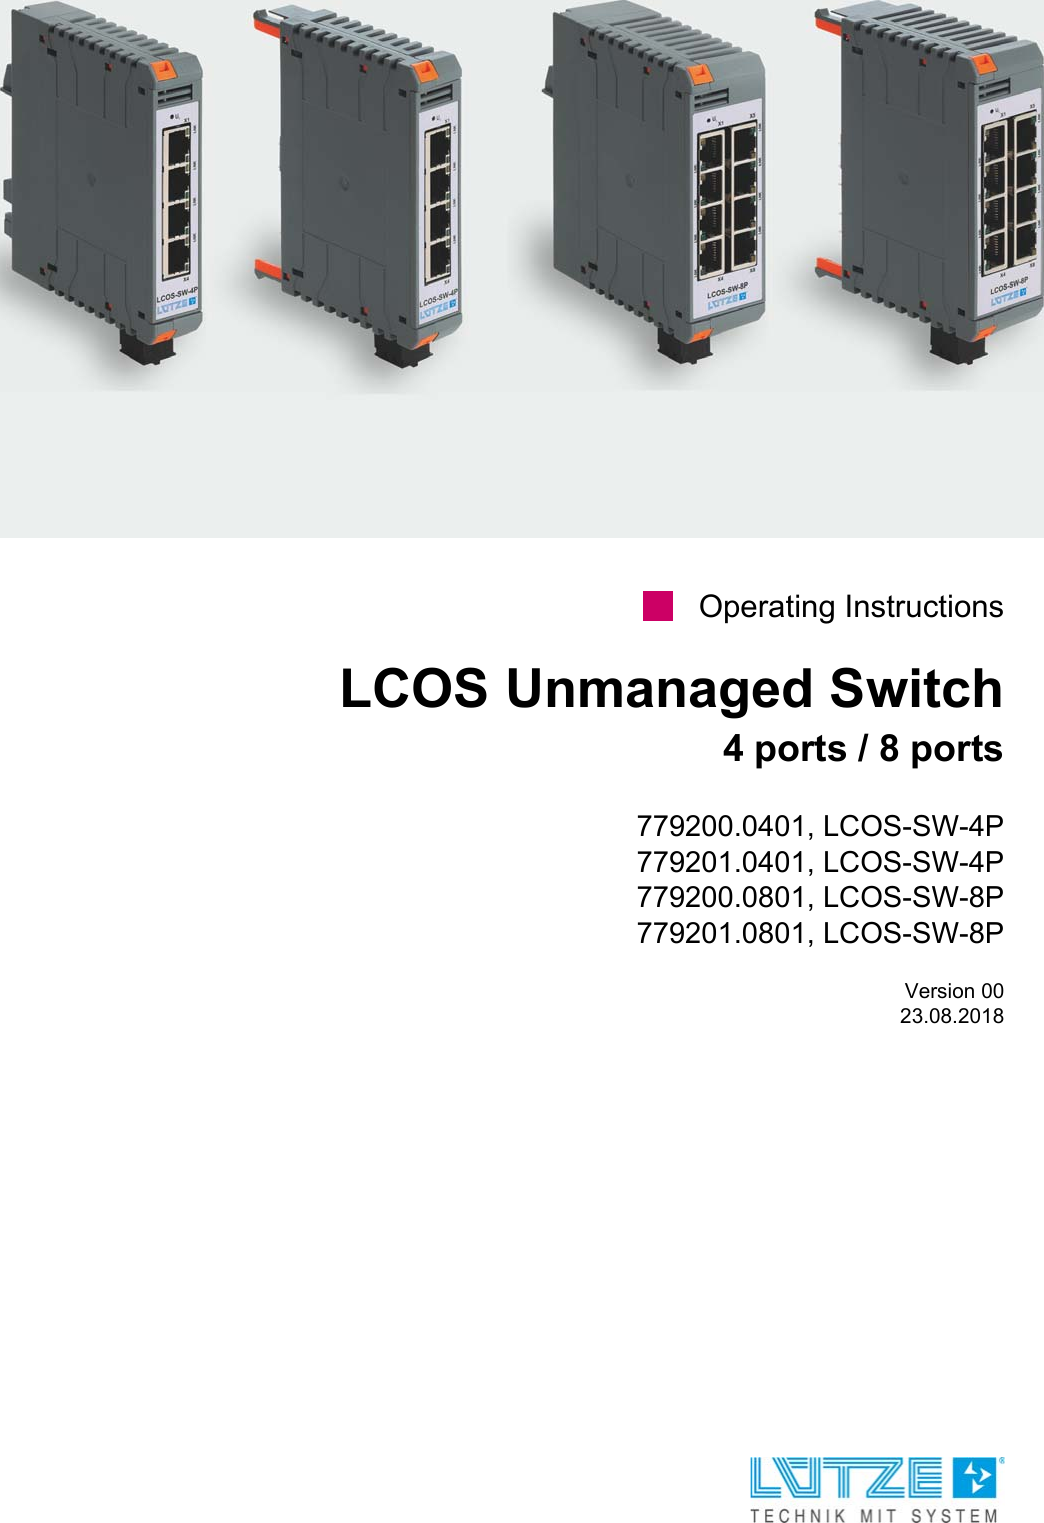 Operating InstructionsLCOS Unmanaged Switch4 ports / 8 ports779200.0401, LCOS-SW-4P779201.0401, LCOS-SW-4P779200.0801, LCOS-SW-8P779201.0801, LCOS-SW-8PVersion 0023.08.2018